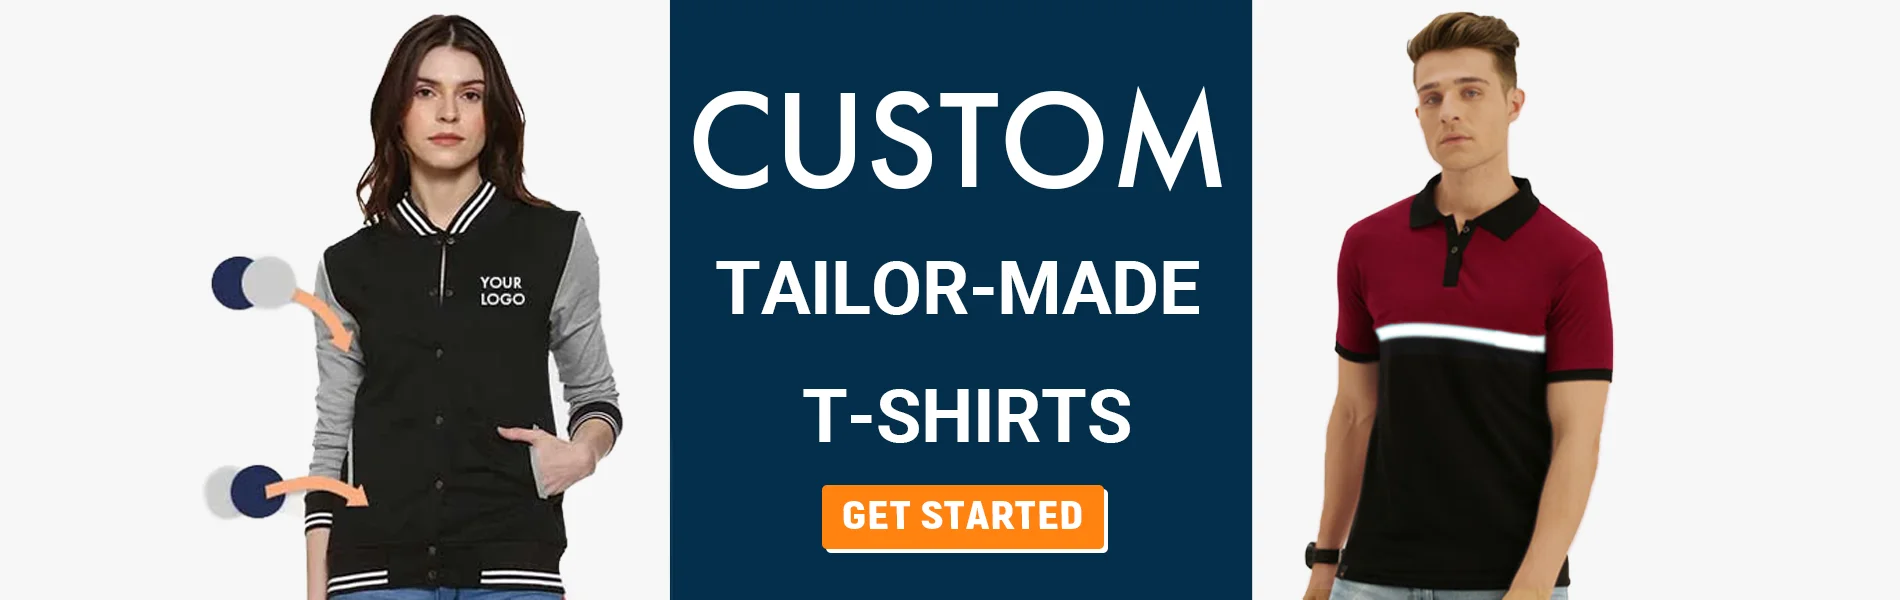 custom tailormade t-shirts hyderabad